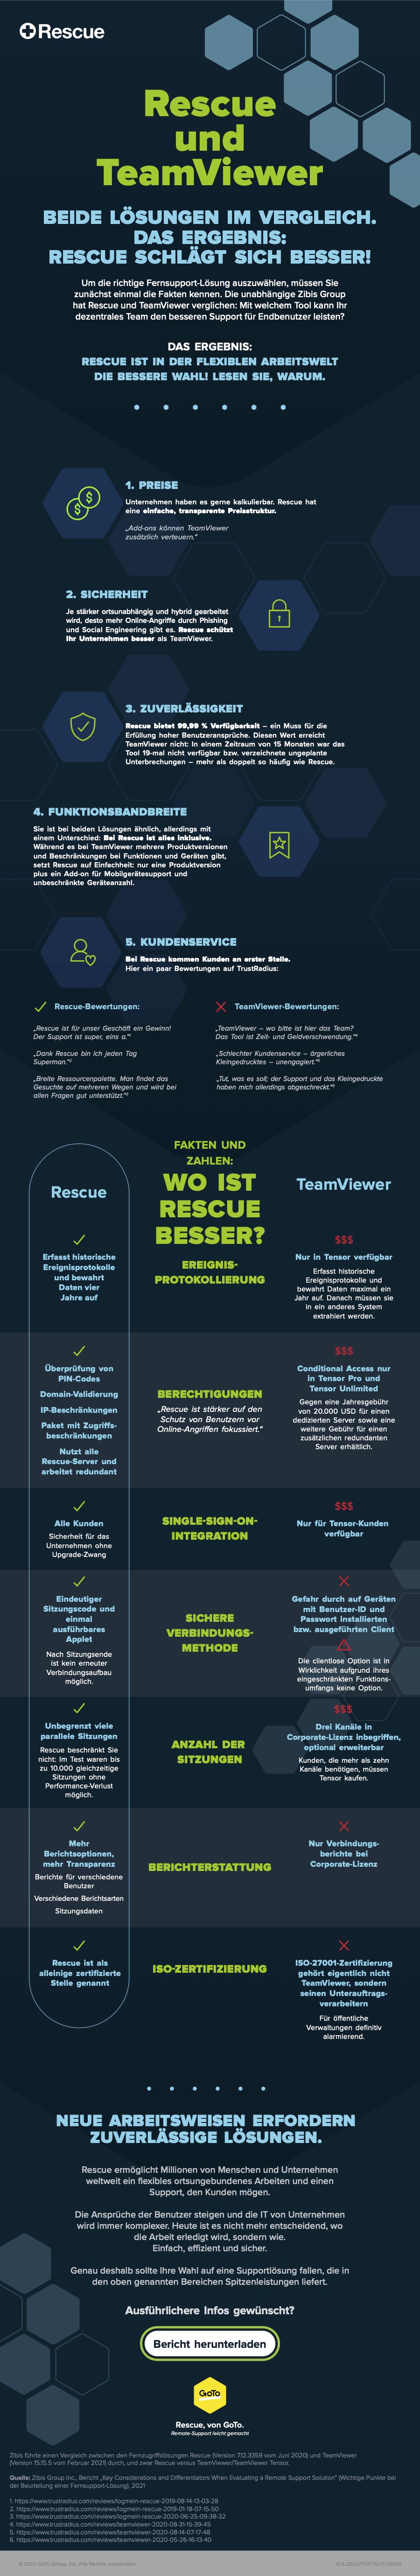 LogMeIn Rescue vs TeamViewer DE